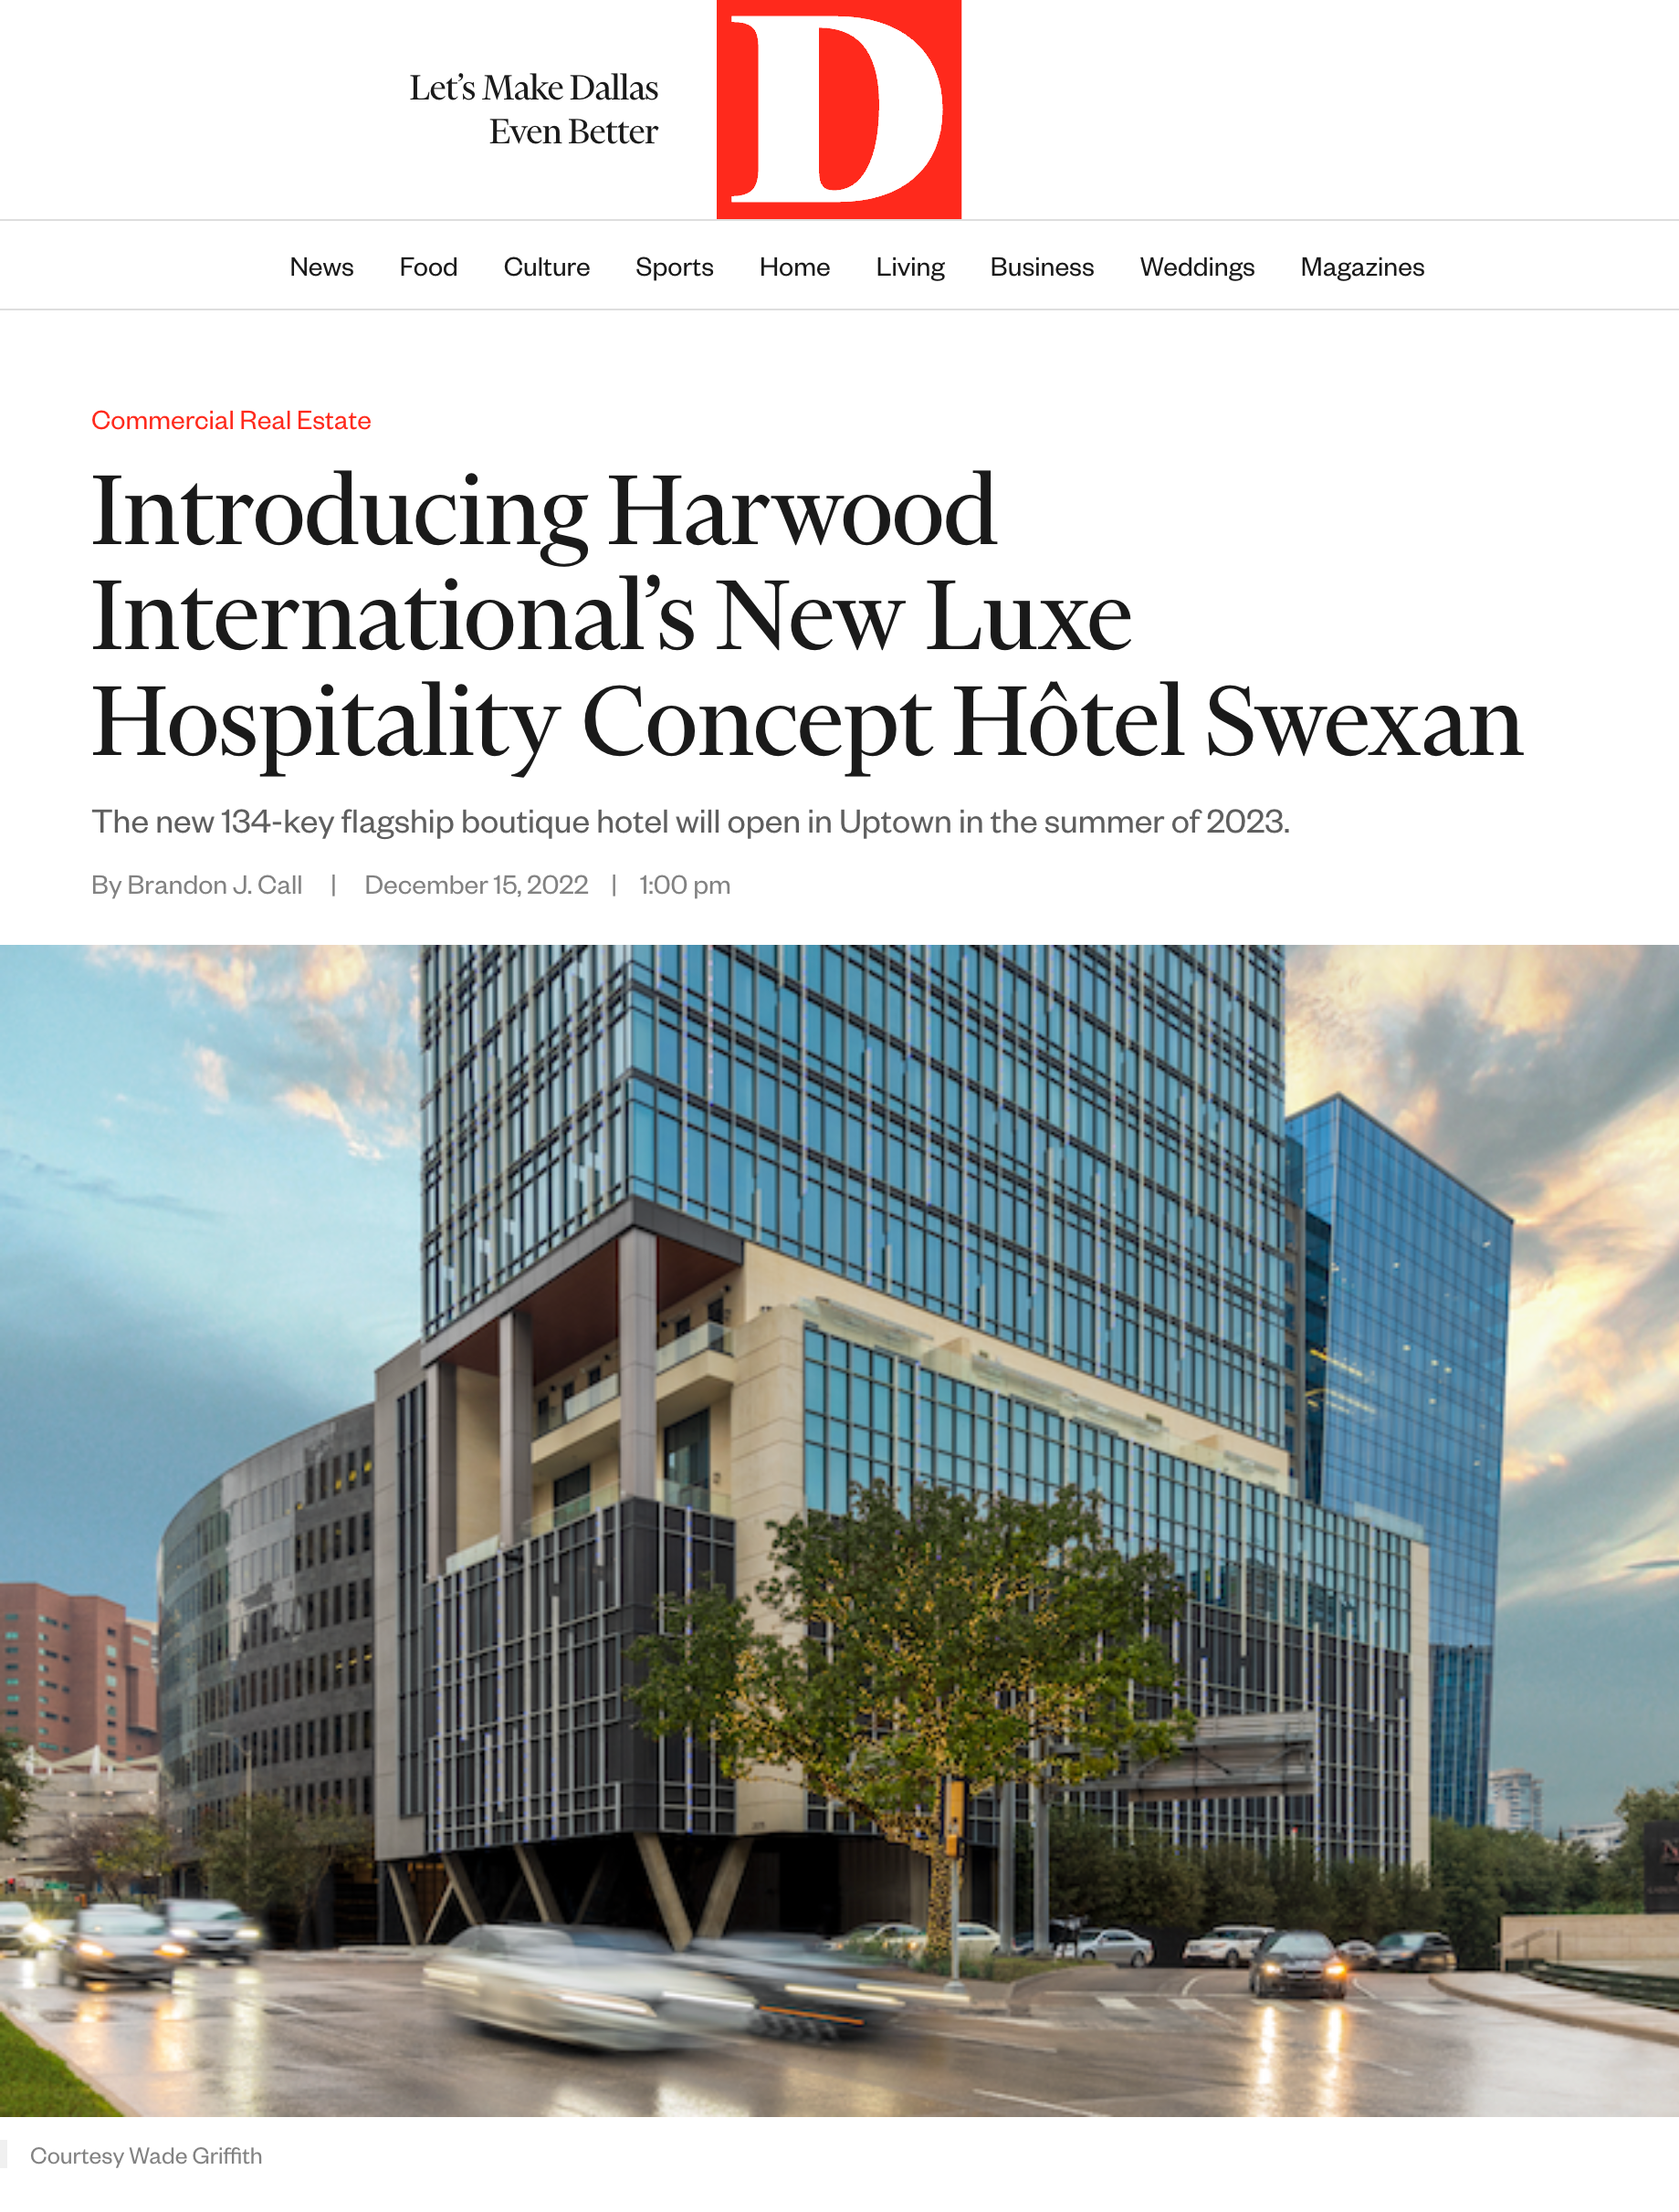 Hotel Swexen in D Magazine